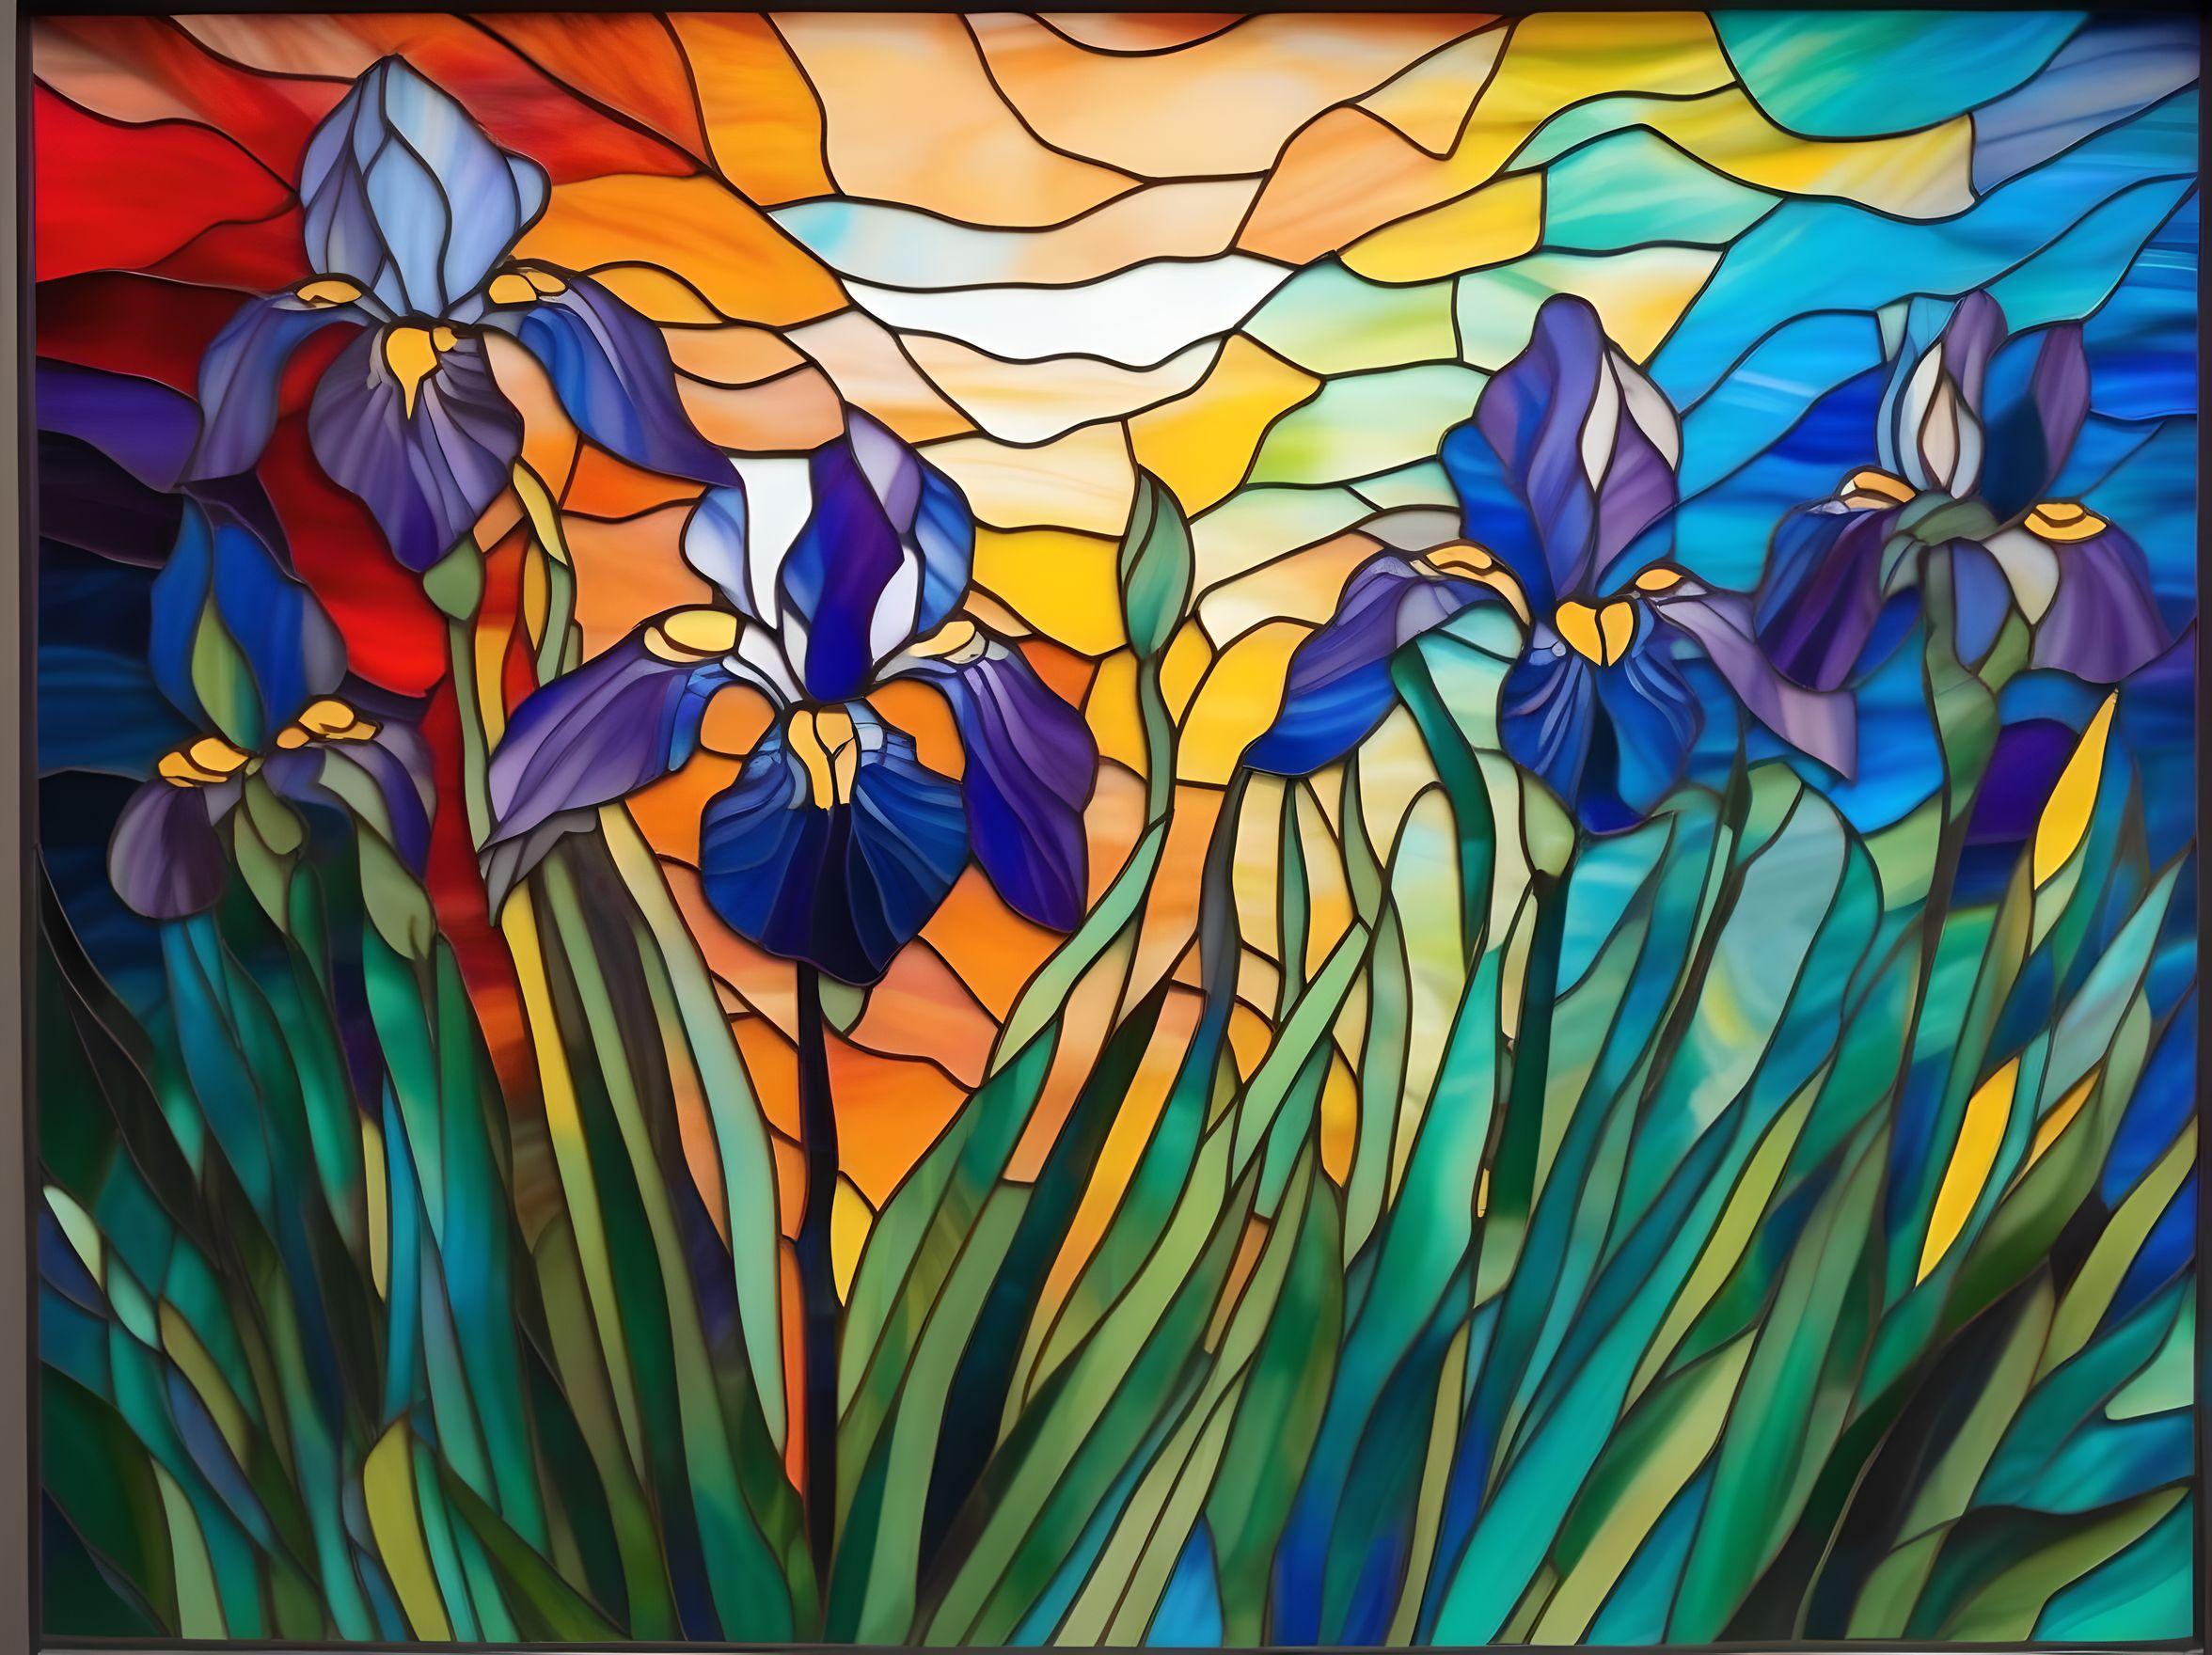 Re-imagine Vincent van Gogh’s Irises